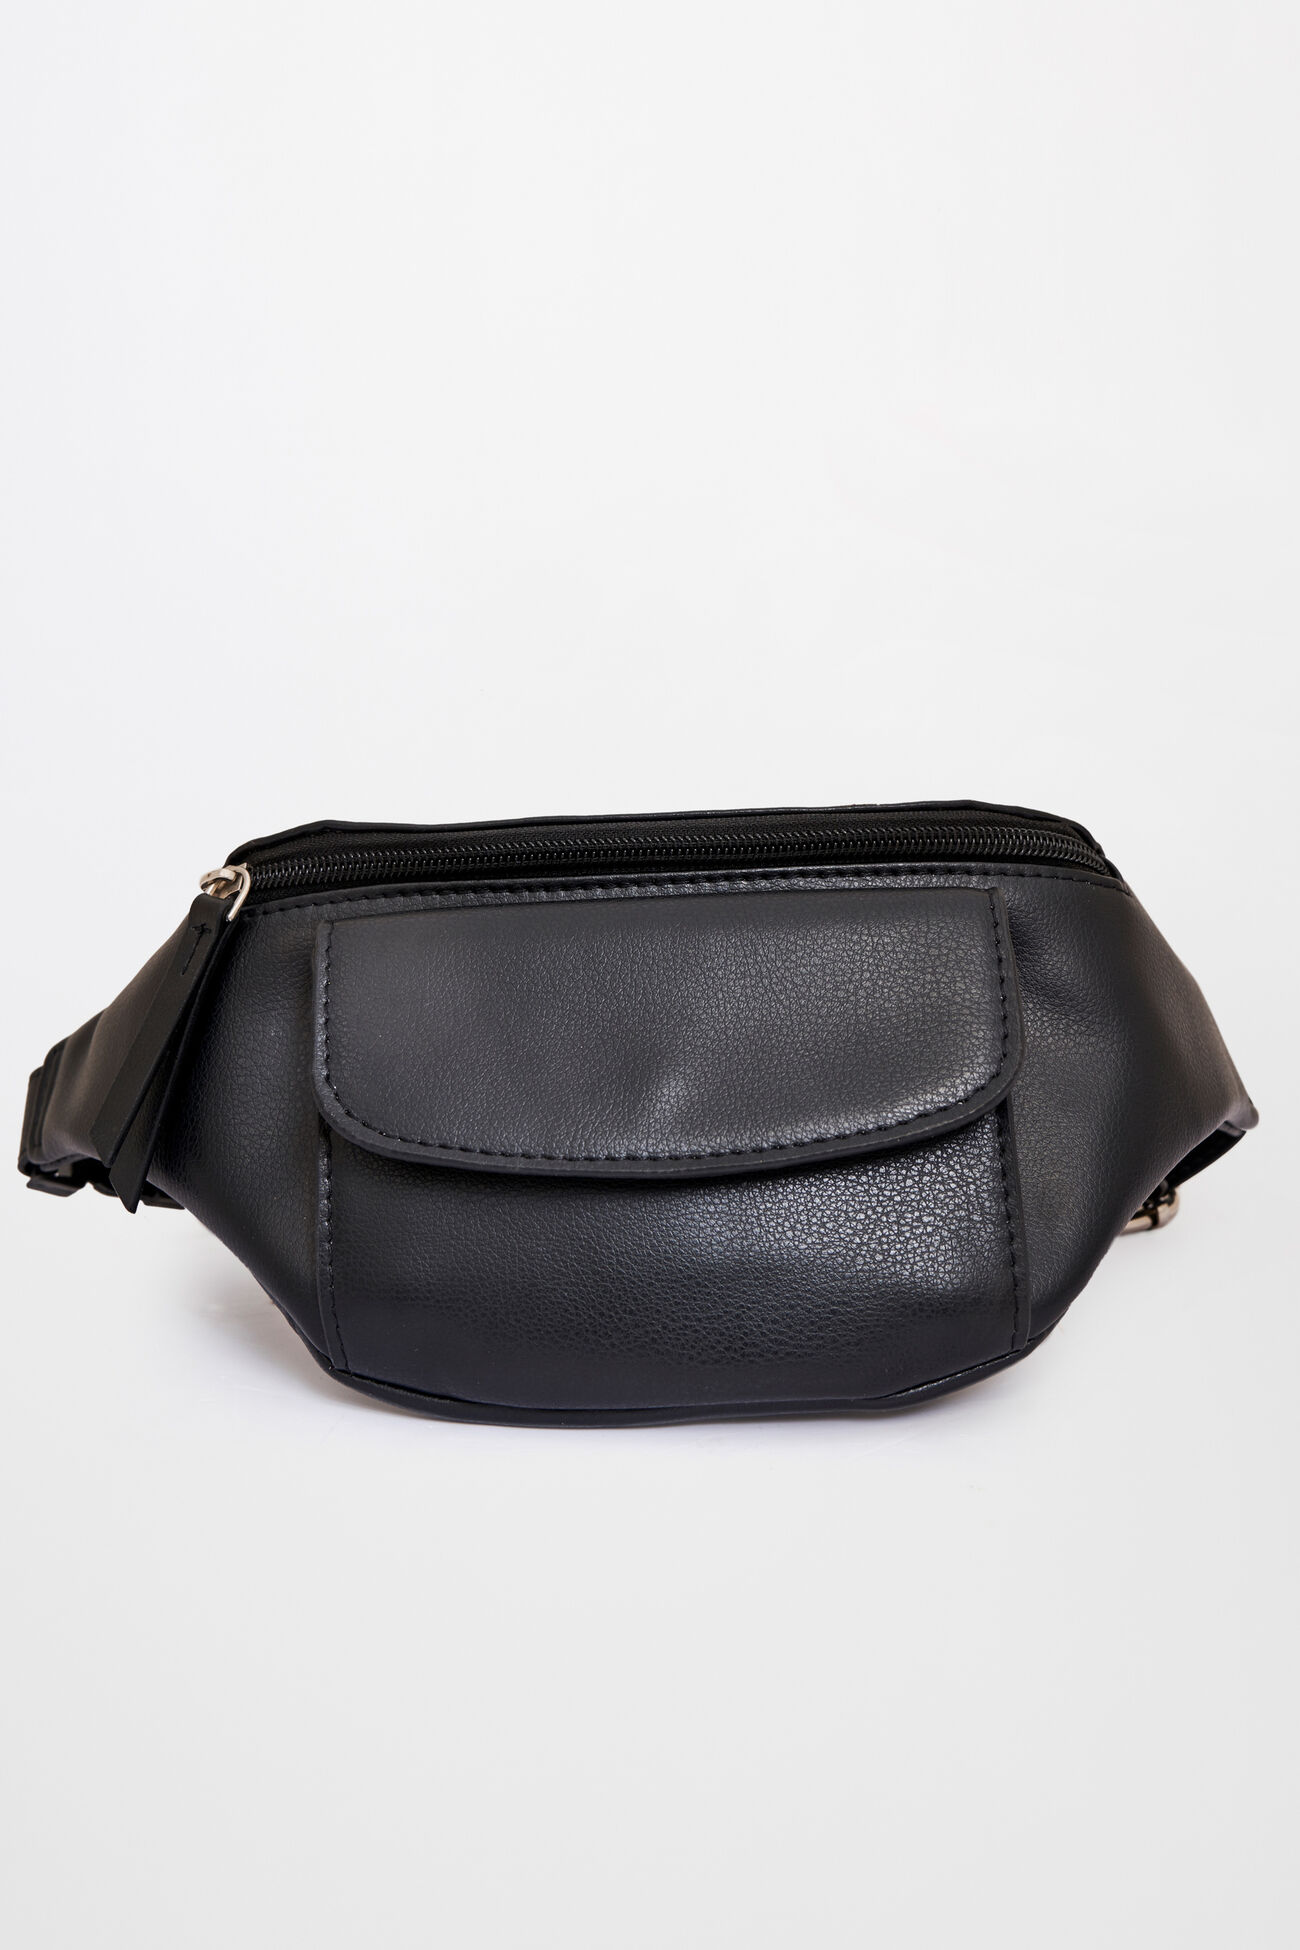 Black Zipper Bag, , image 2